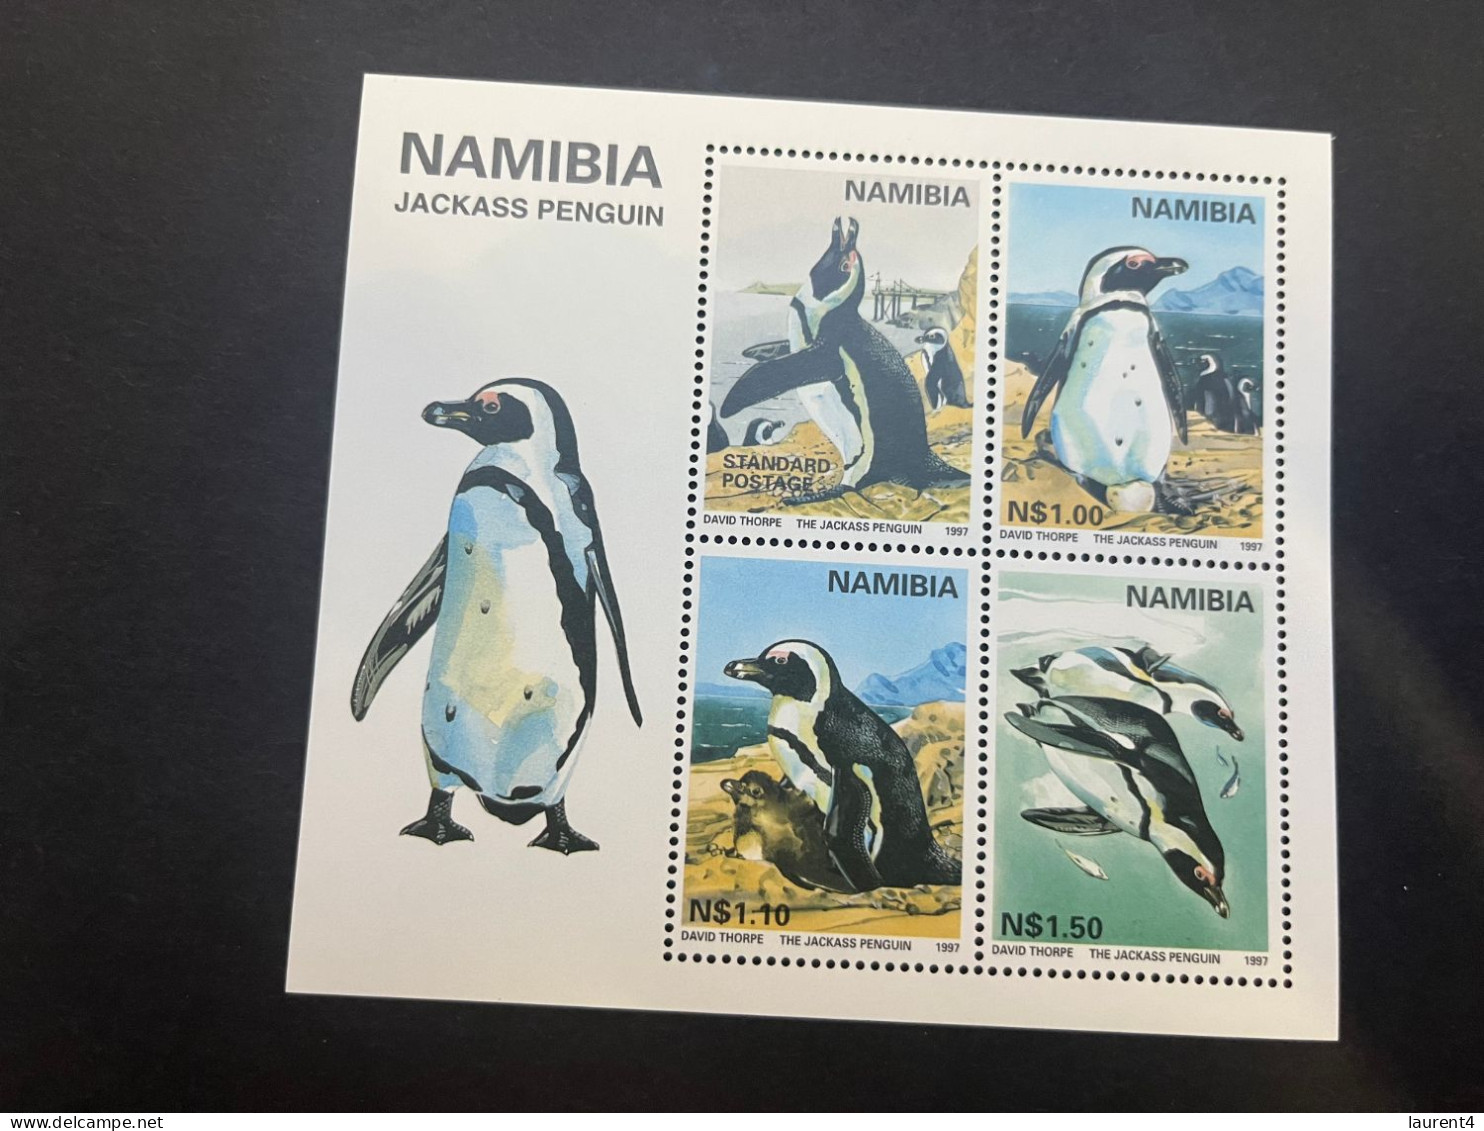 13-5-2024 (stamp) Mint (neuve) Mini-sheet - Namibia - Penguins - Pingueinos